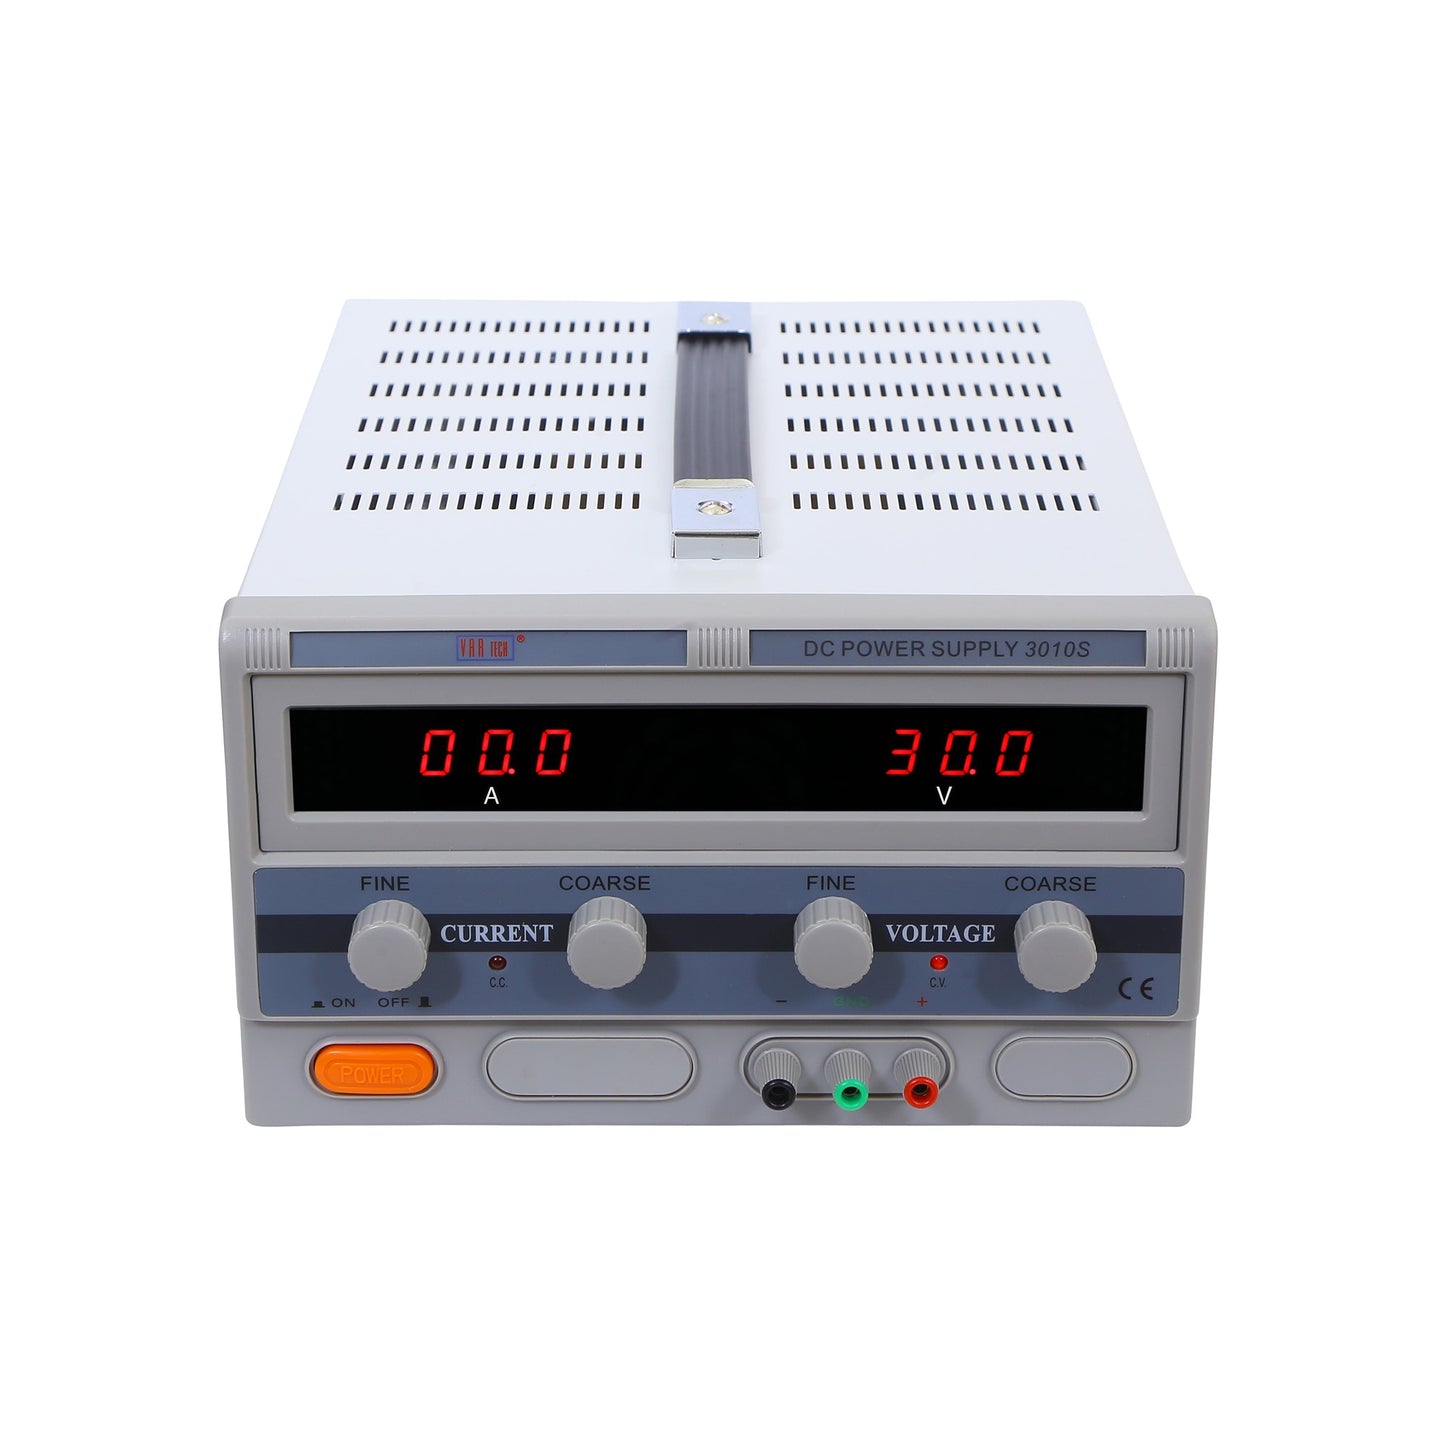 PSU-30-ACL, 1006-3103-1317010, PSU Servo Power Supply Series